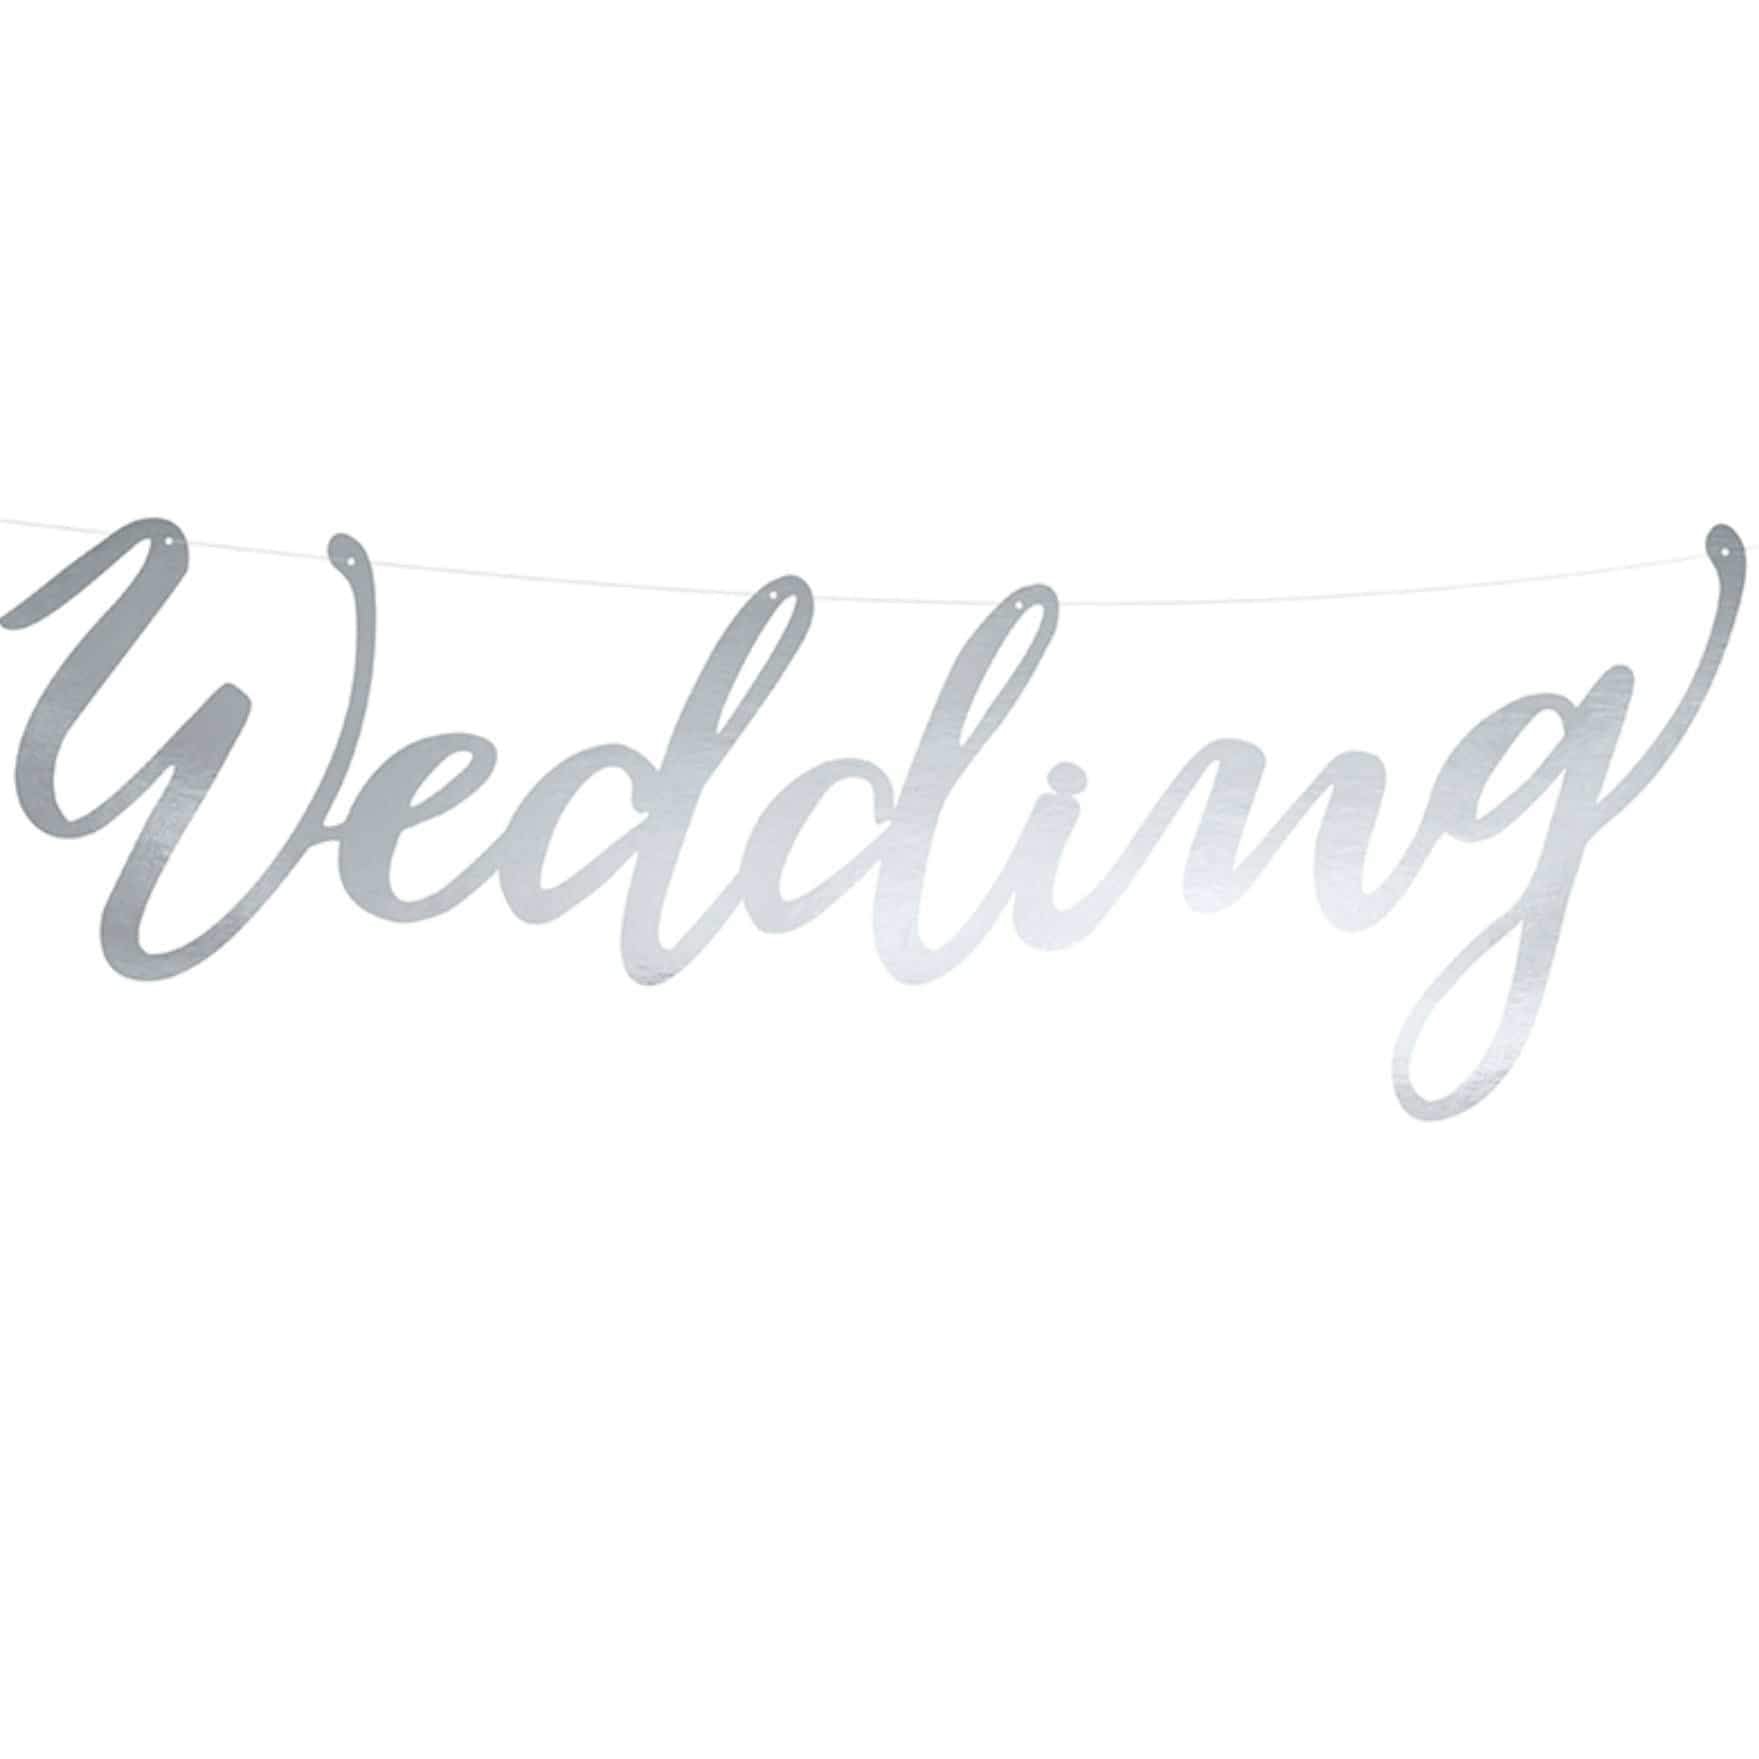 Silver Wedding Banner | Wedding Venue Decor | Pretty Little Party Shop Party Deco